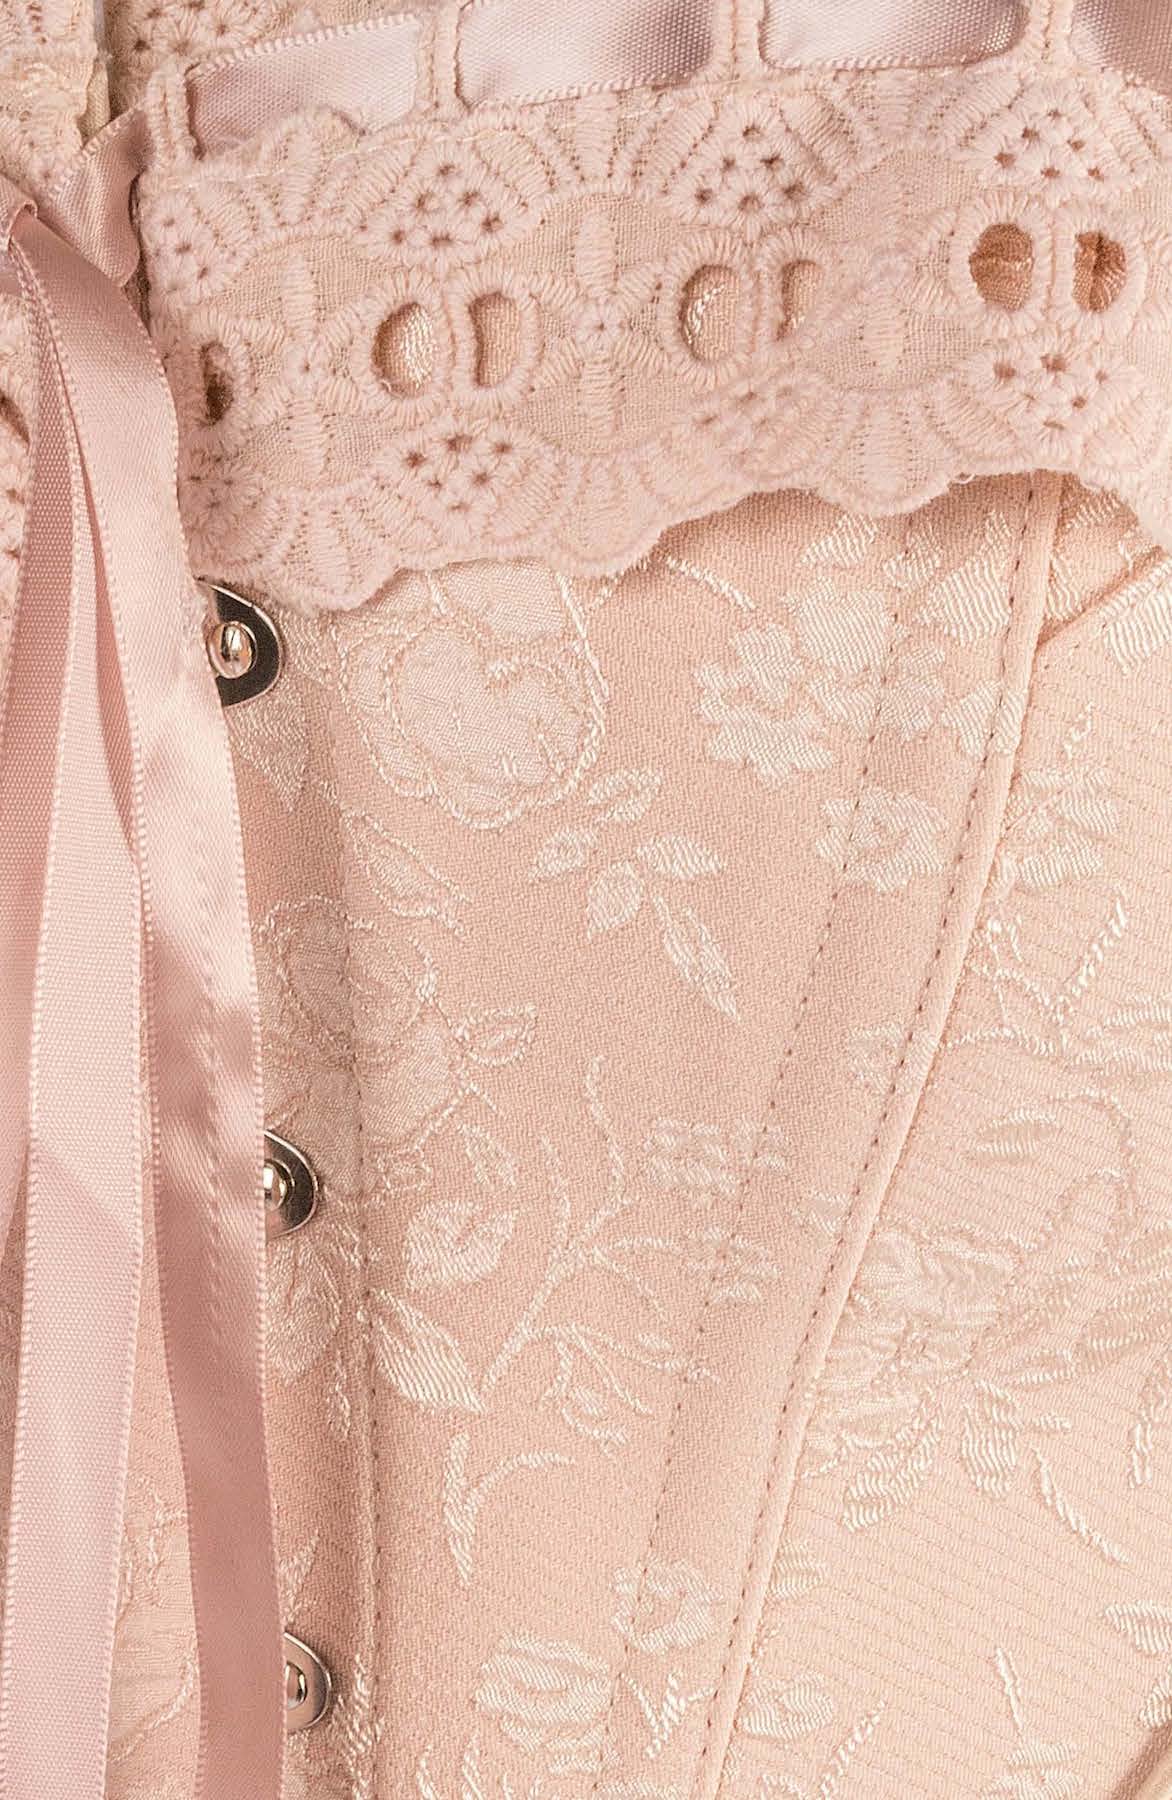 Victorian Vintage Inspired Pink Corset Top